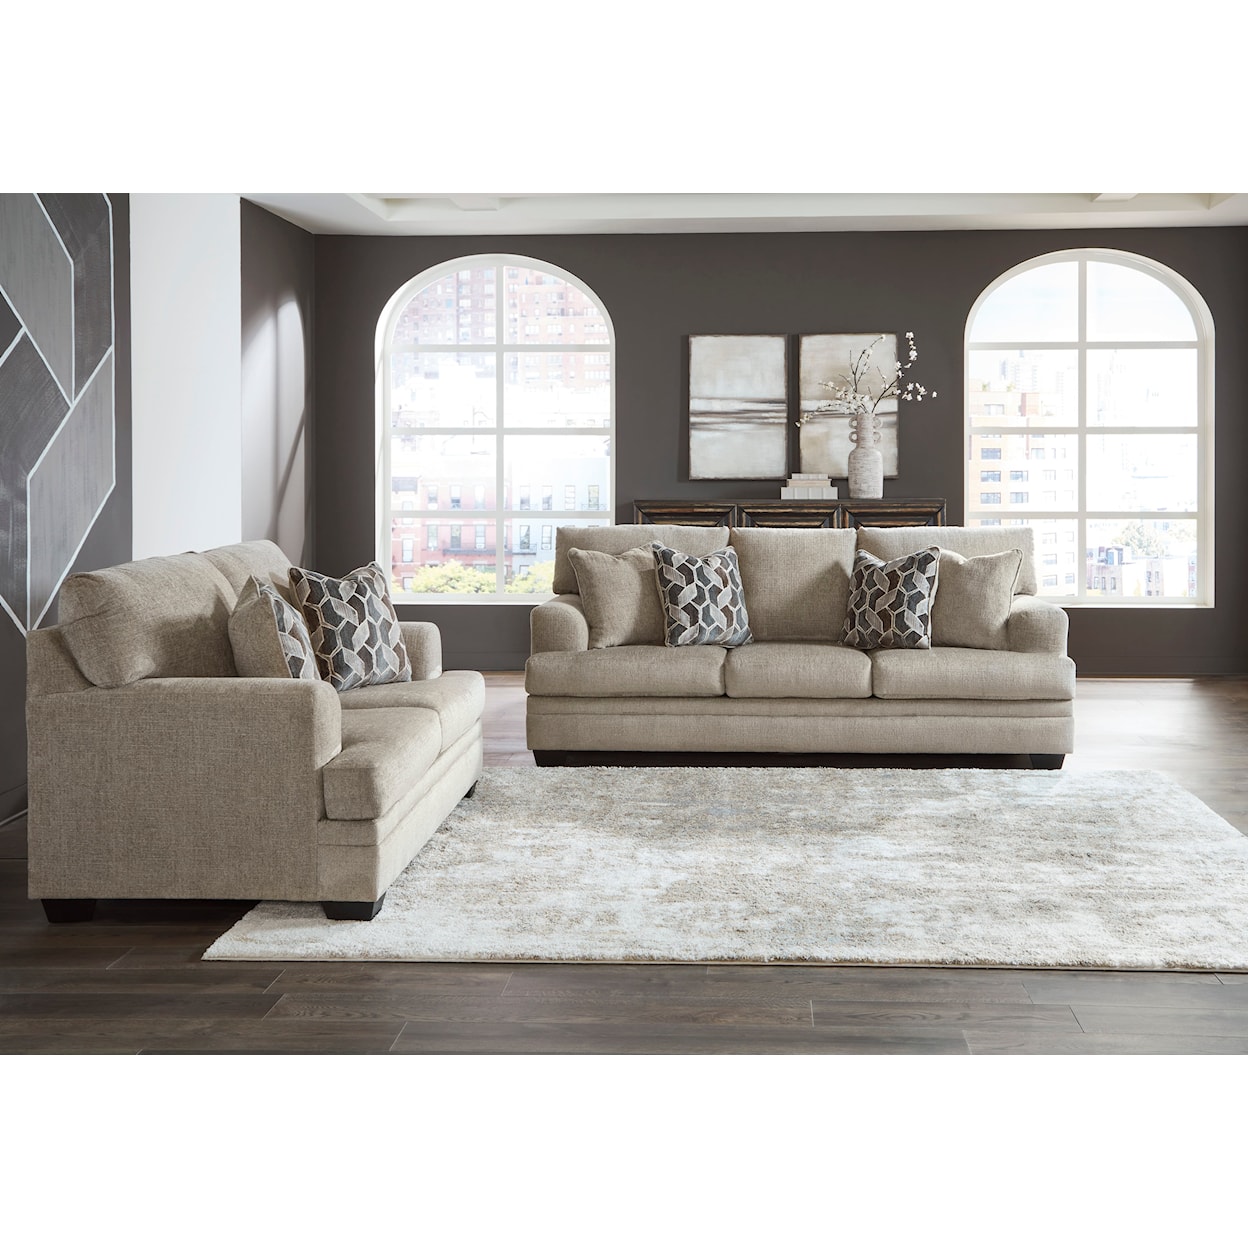 StyleLine Stonemeade Living Room Set